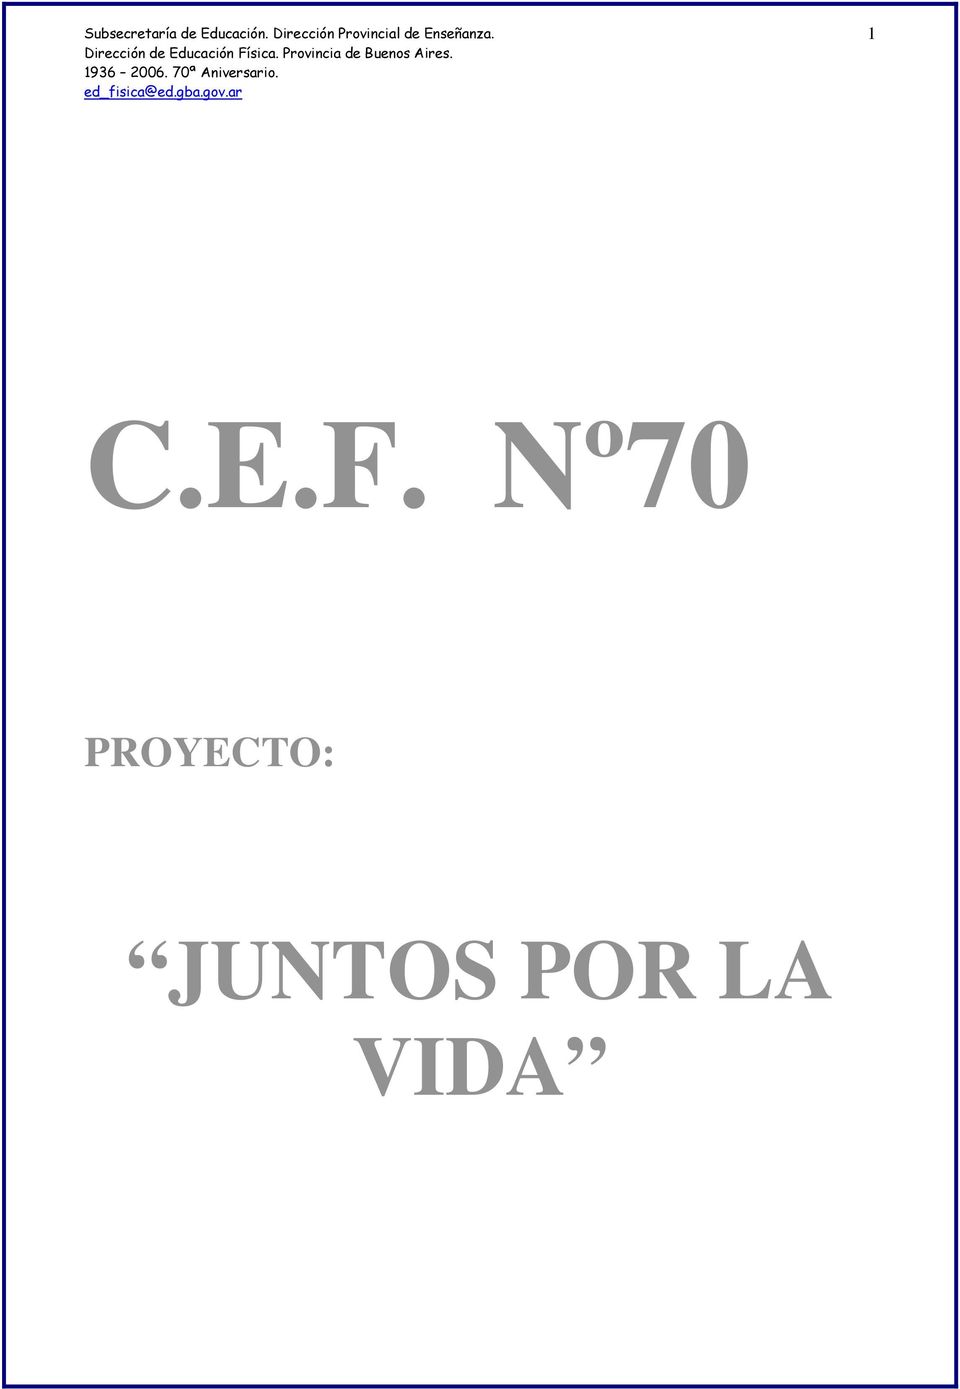 F. Nº7 PROYECTO: